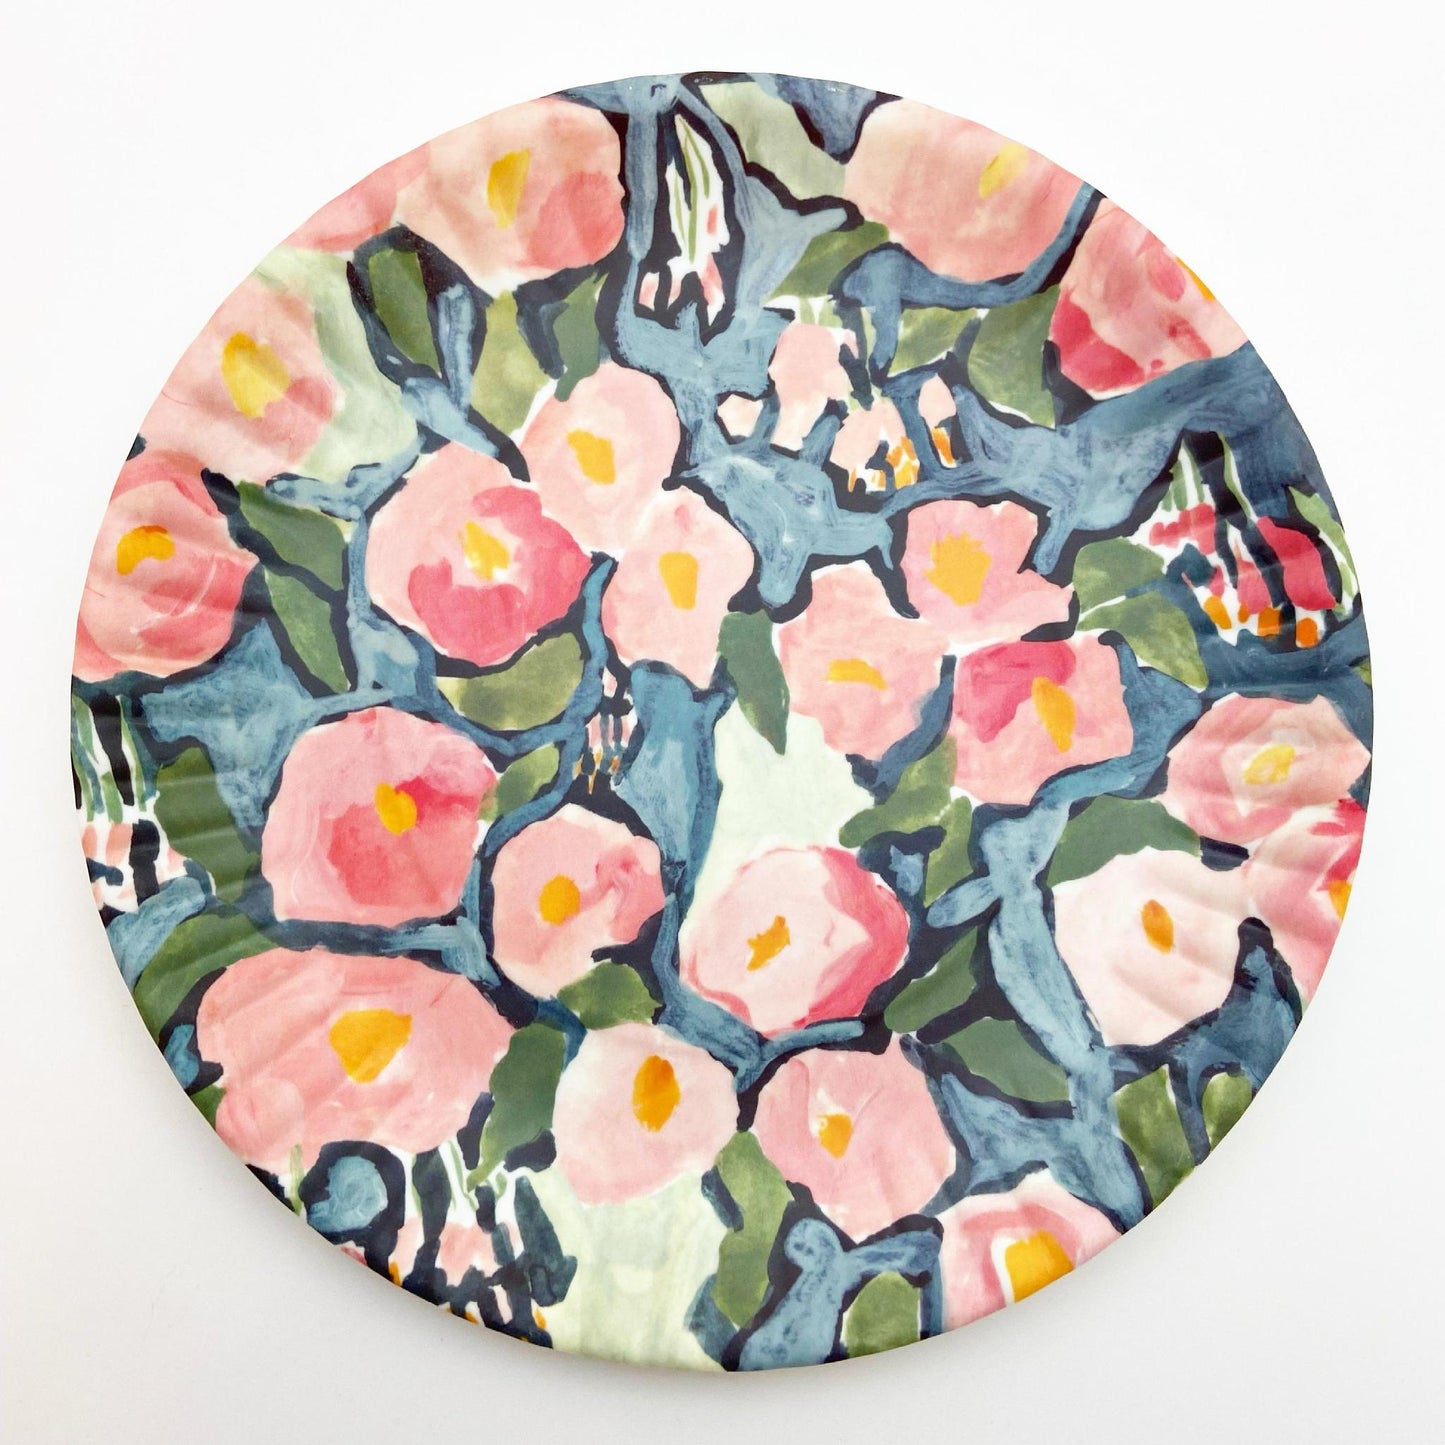 Plate - Melamine "Paper" - Tropical Floral